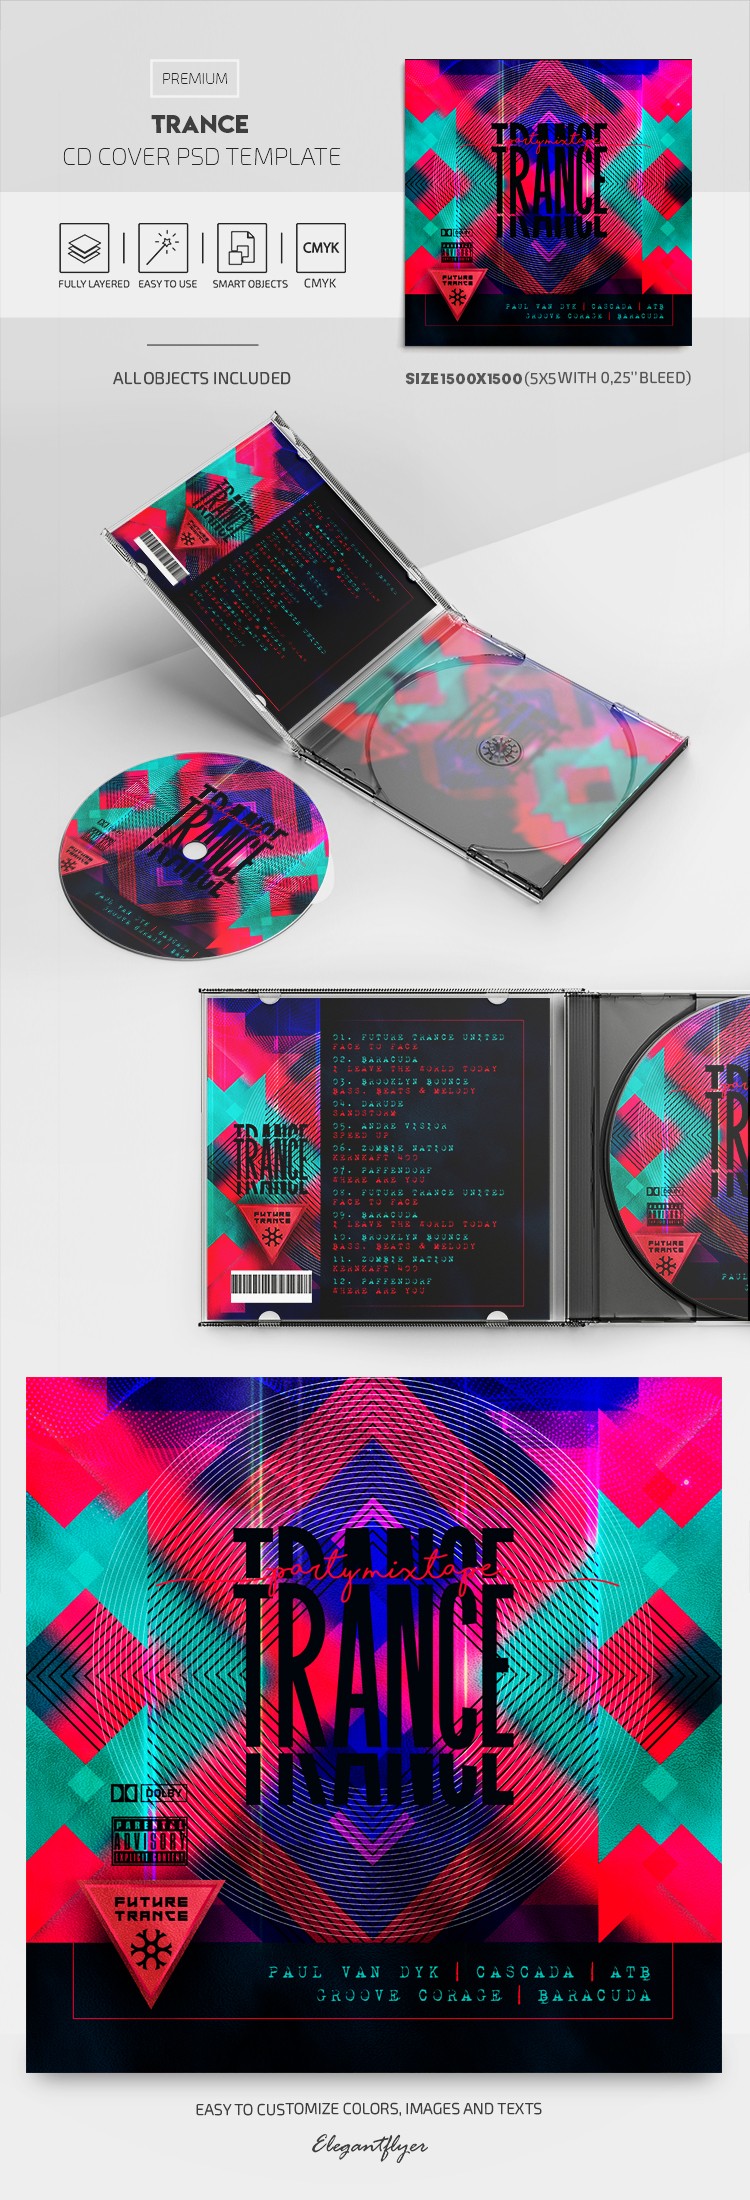 Trance CD Cover by ElegantFlyer